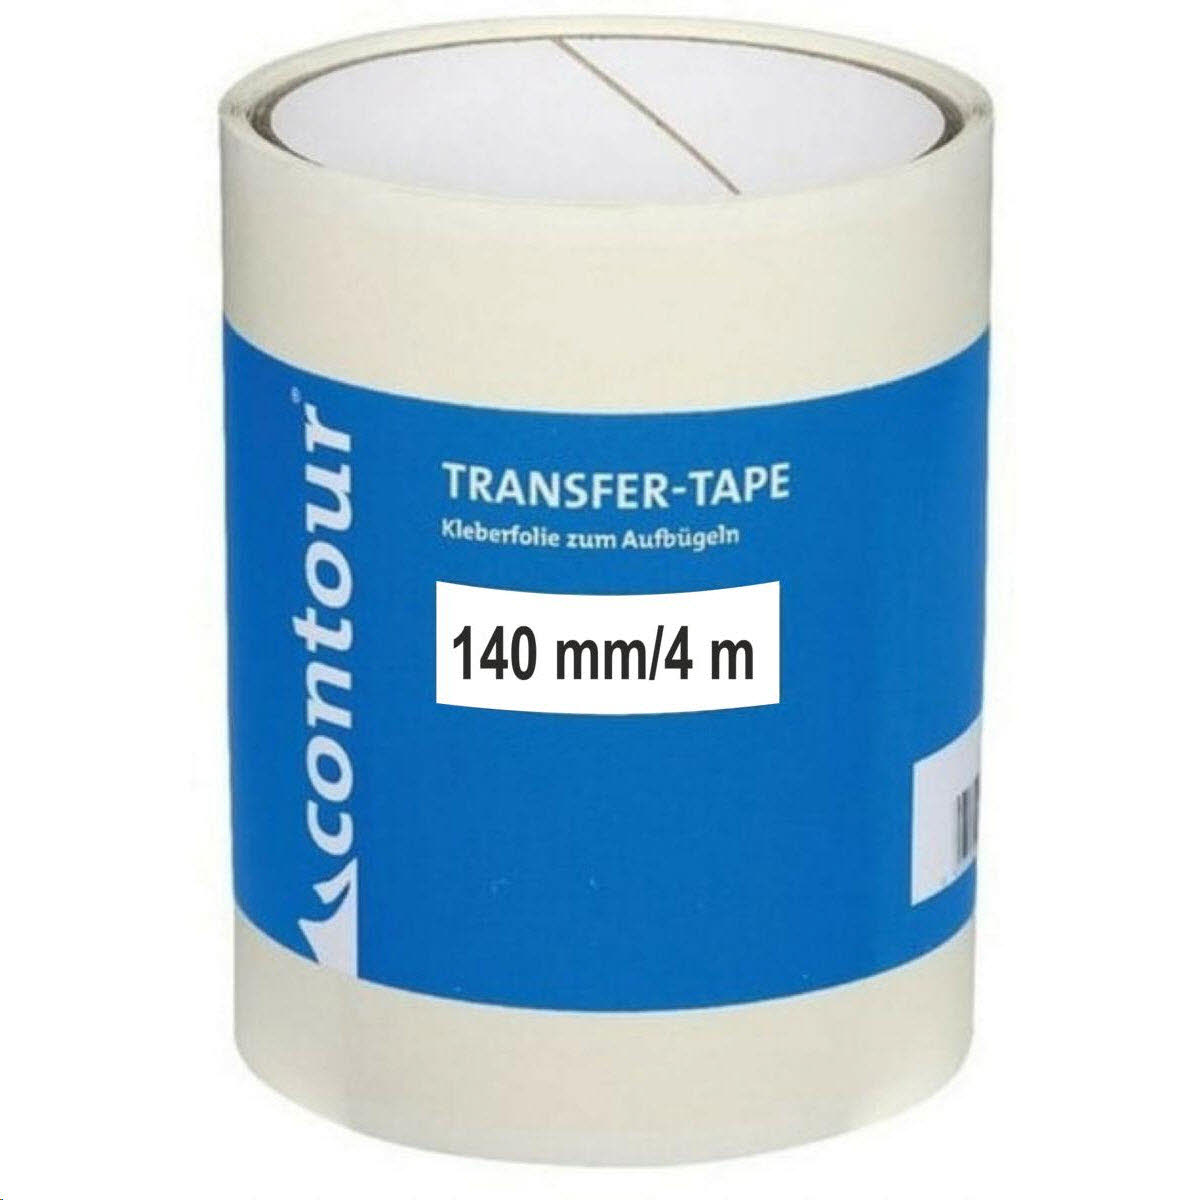 CONTOUR Transfer-Tape 140mm/4m